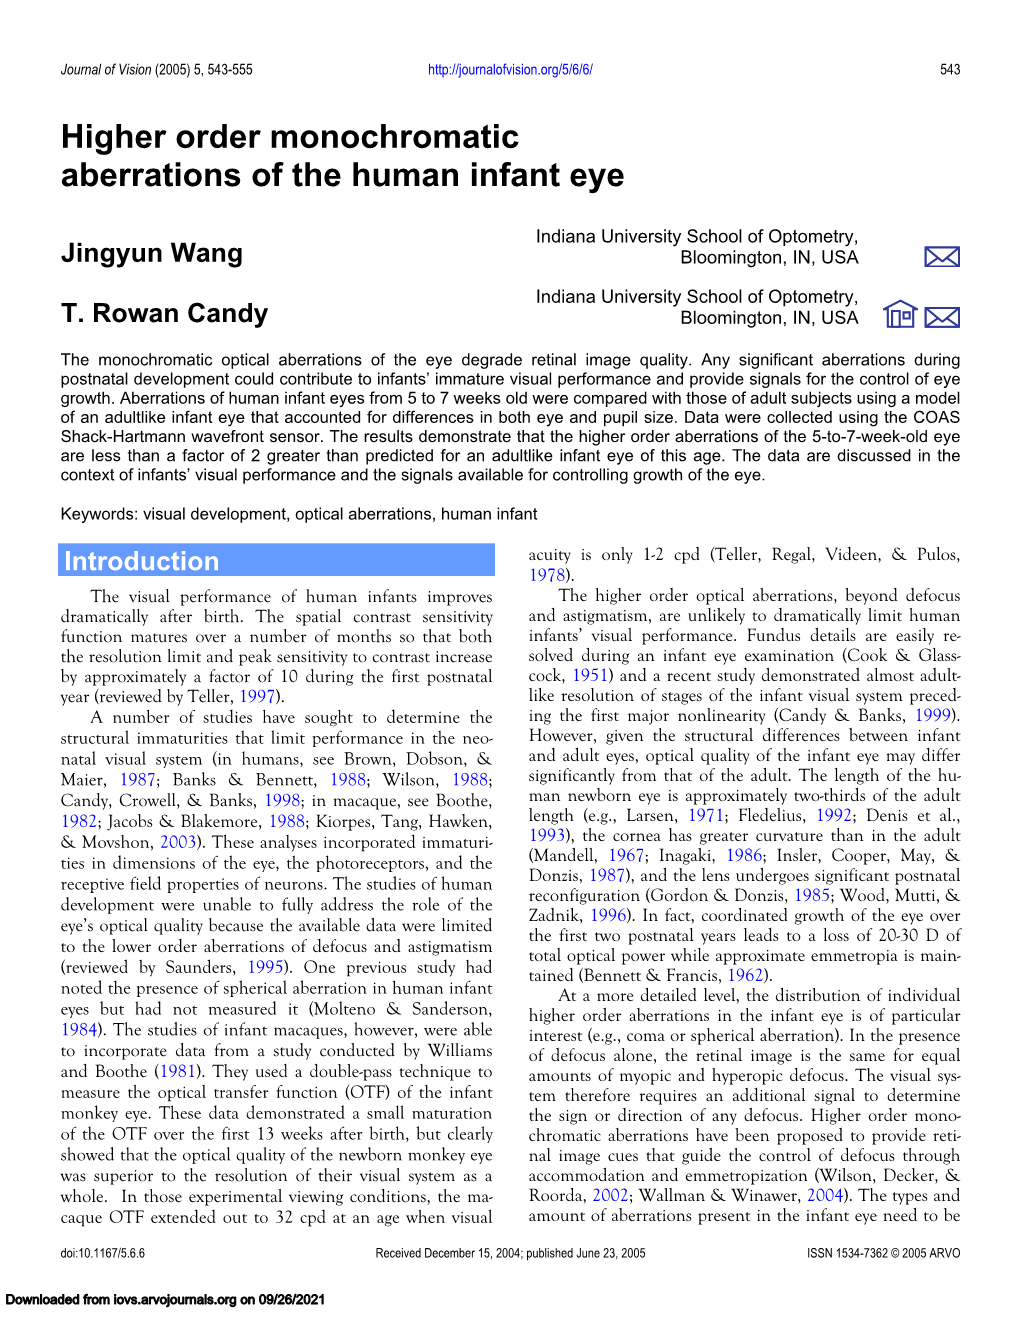 Higher Order Monochromatic Aberrations of the Human Infant Eye